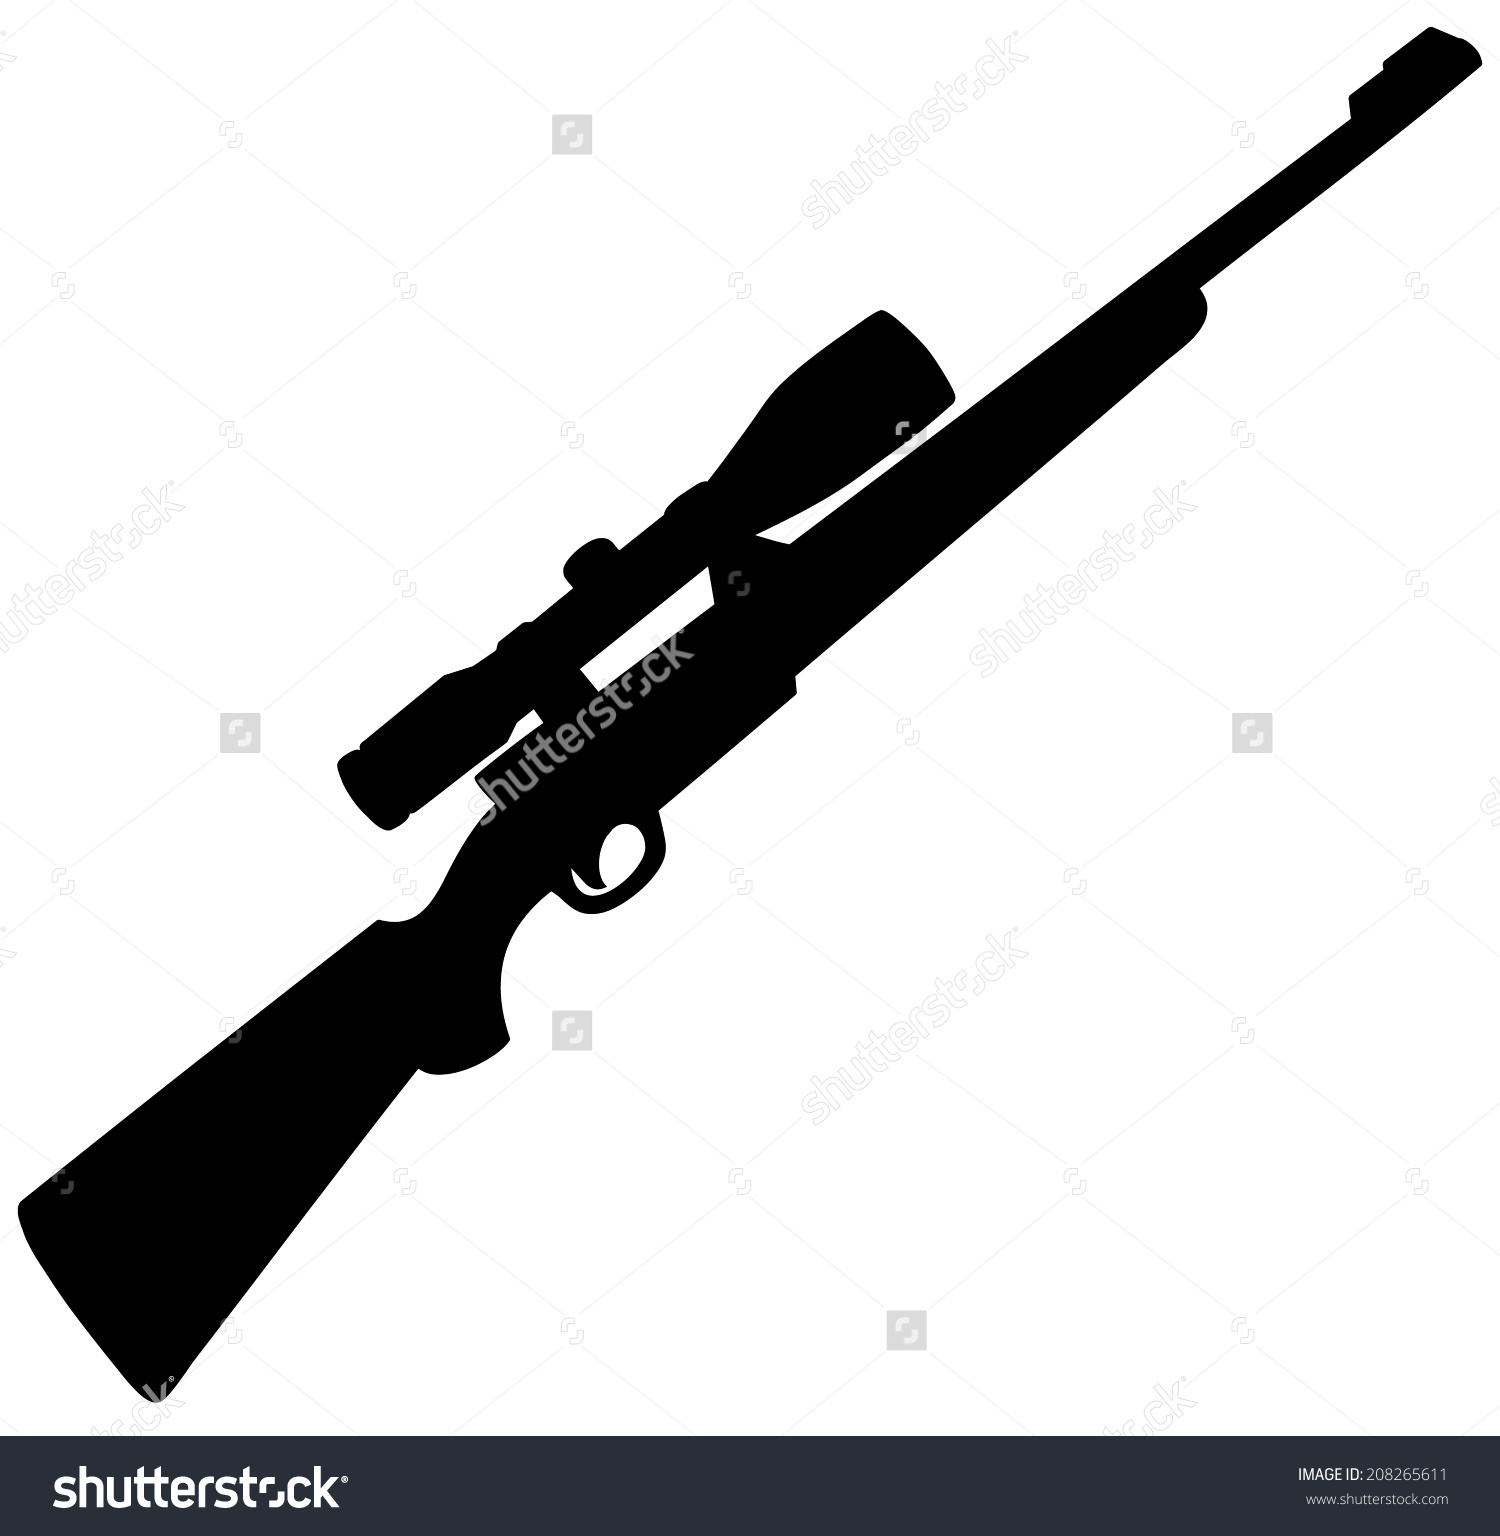 Shotgun clipart military rifle, Picture